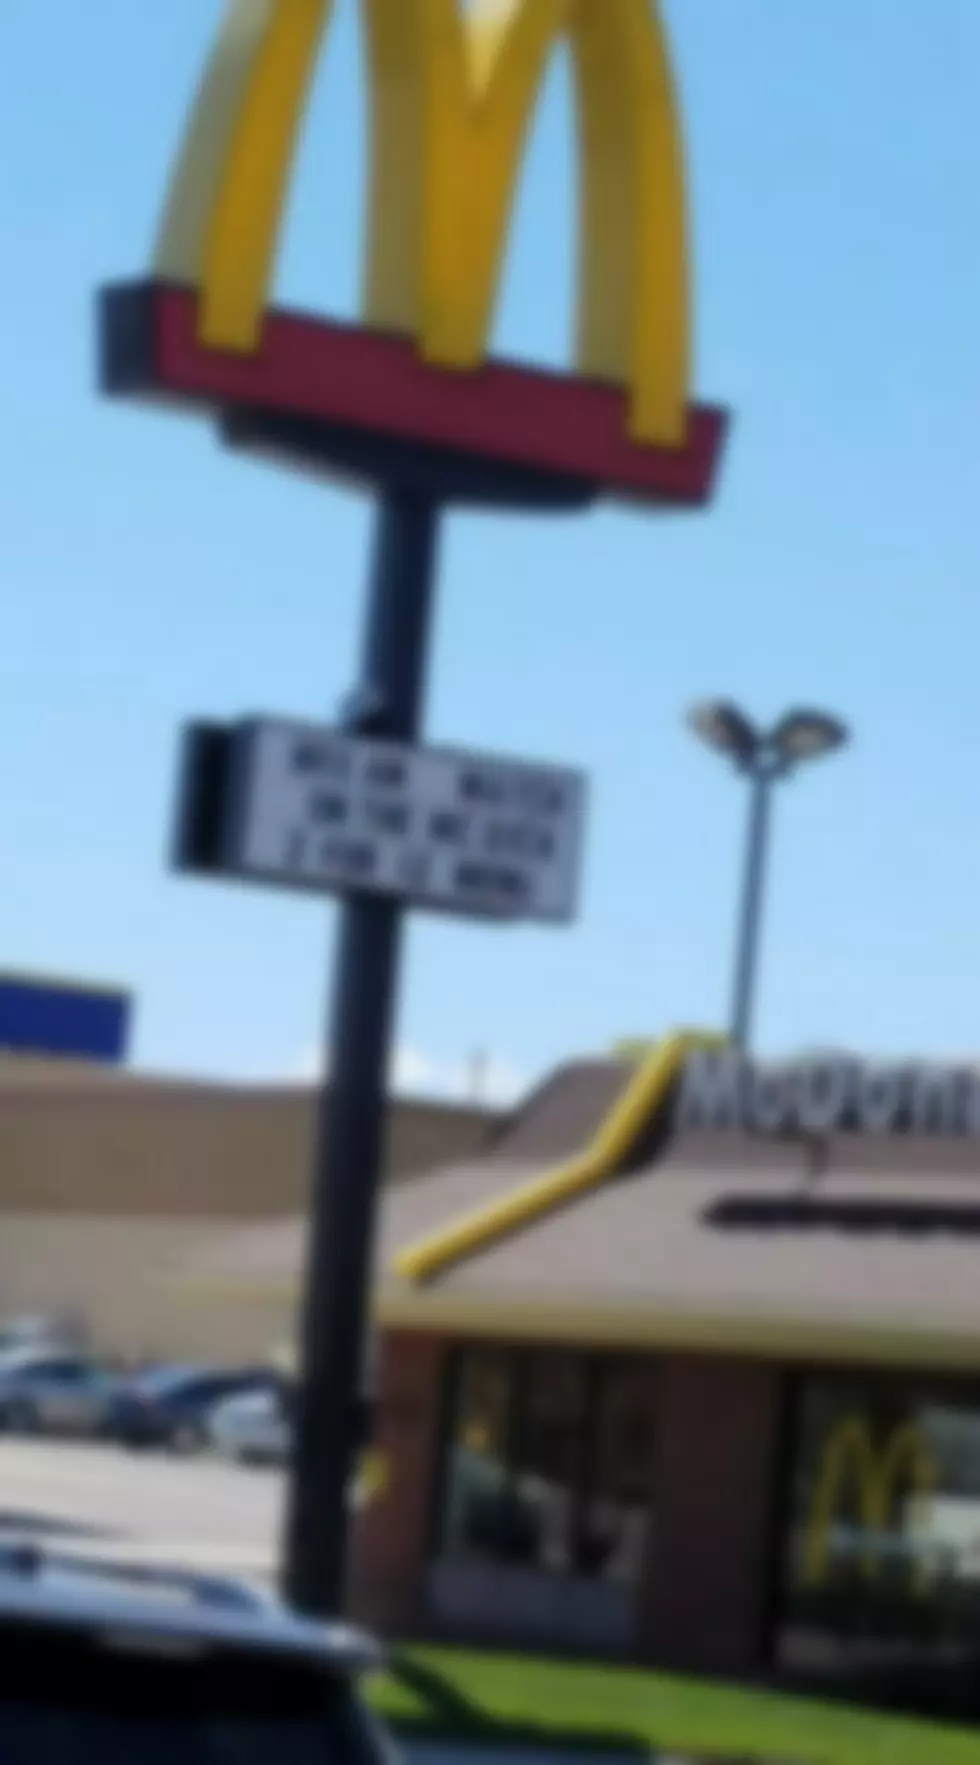 Laramie Fast Food Marquee Typo Or Joke? [Photos, NSFW]